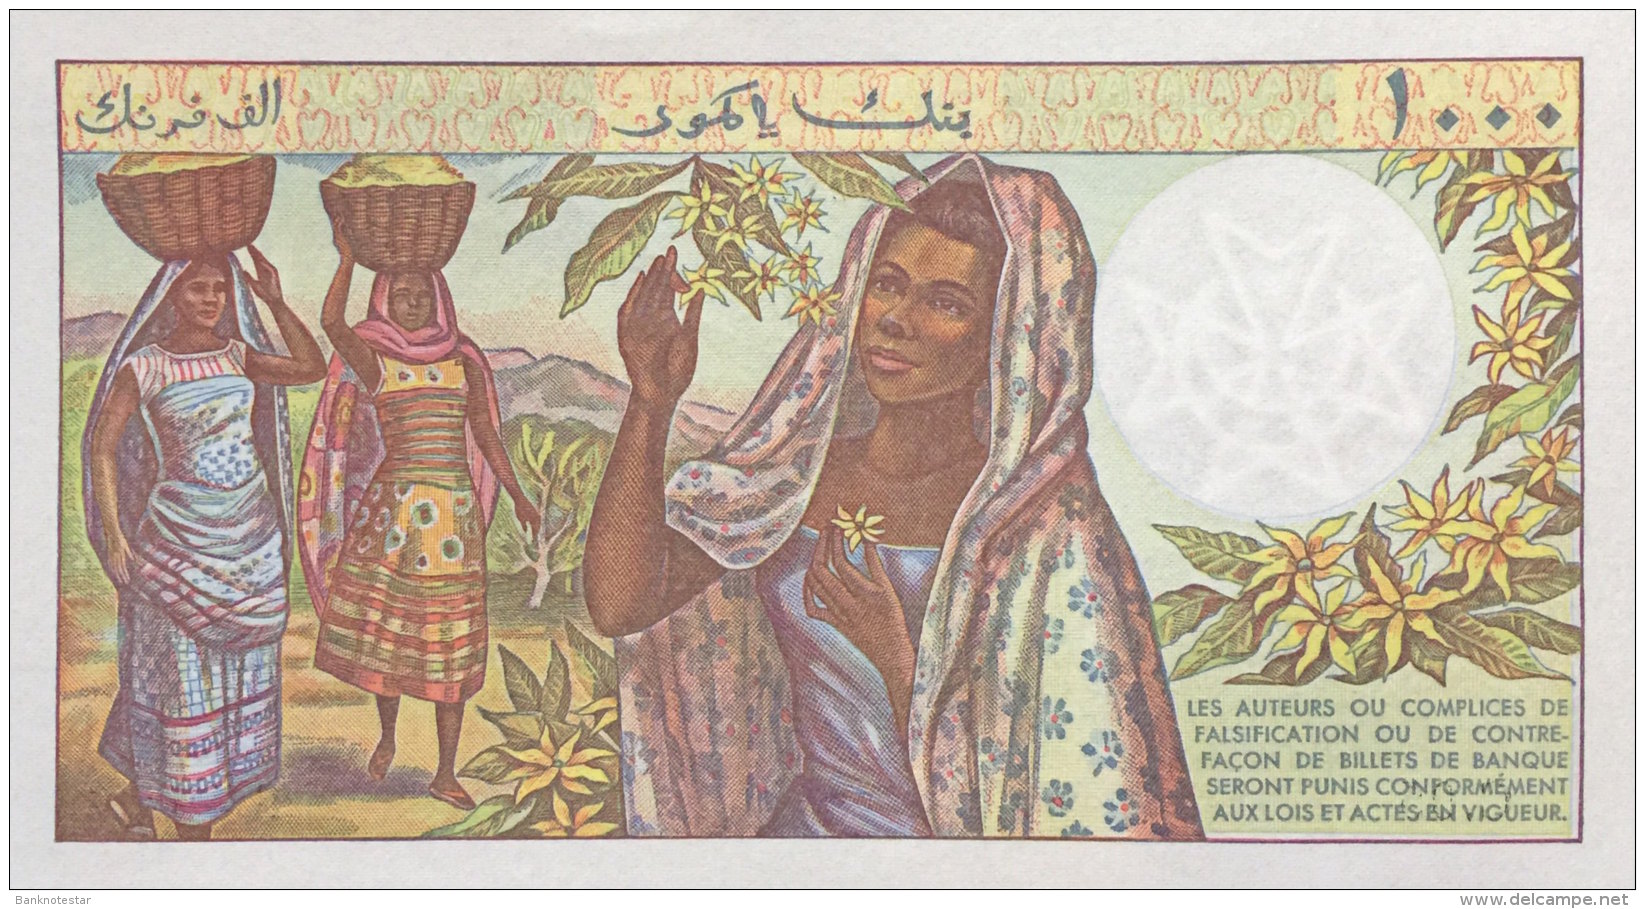 Comoros 1.000 Francs, P-11b 1994 UNC - Komoren